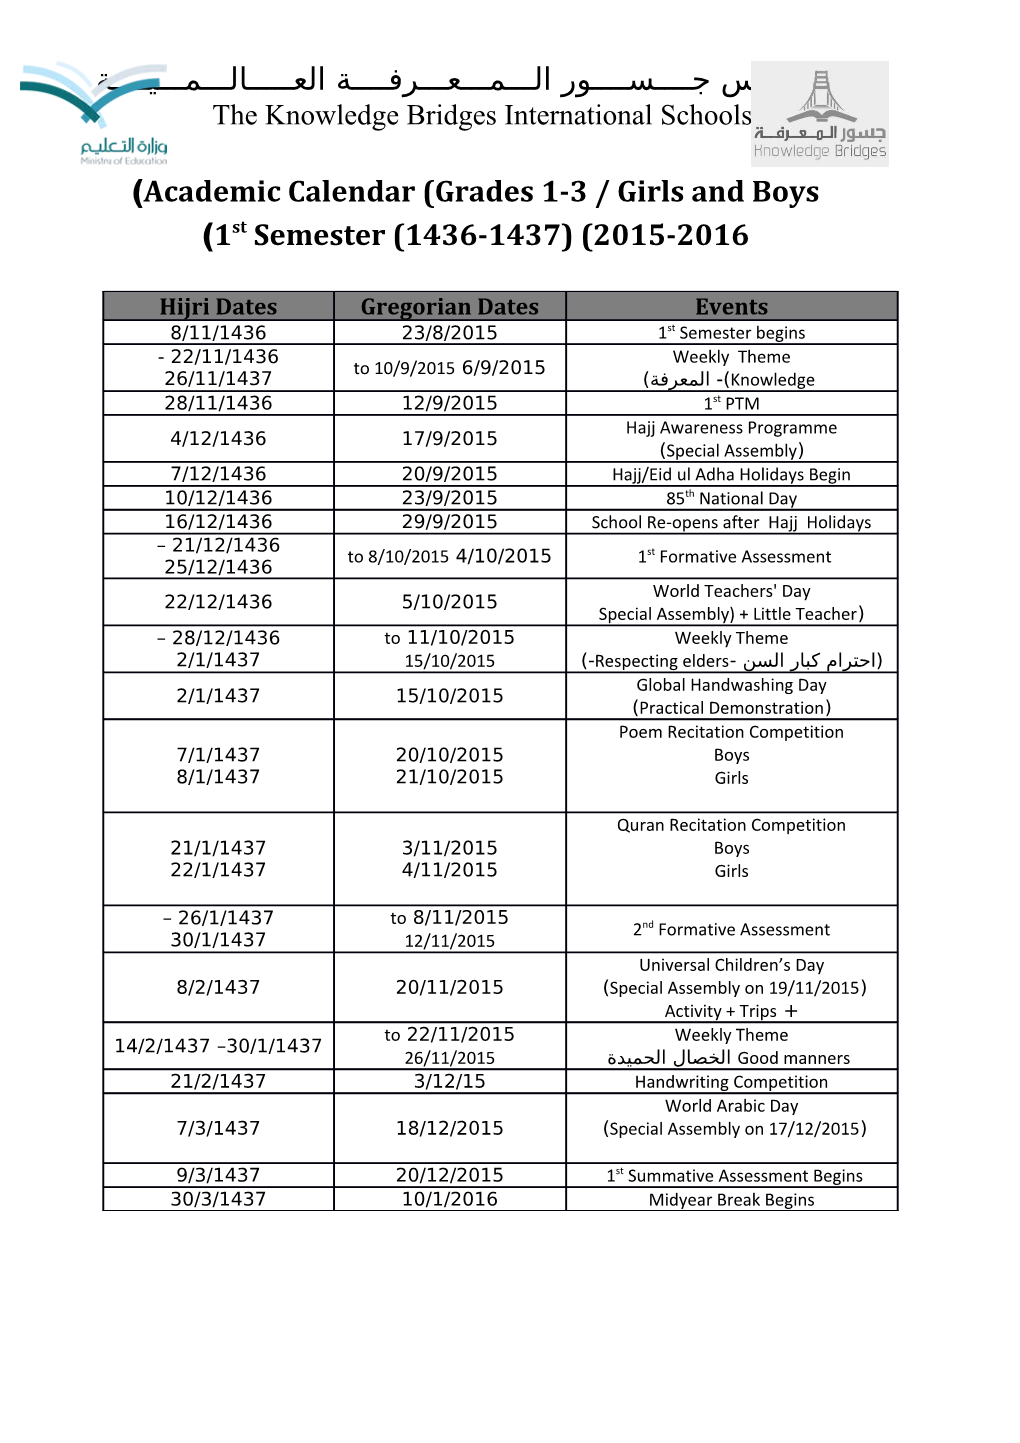 Academic Calendar (Grades 1-3 / Girls and Boys)